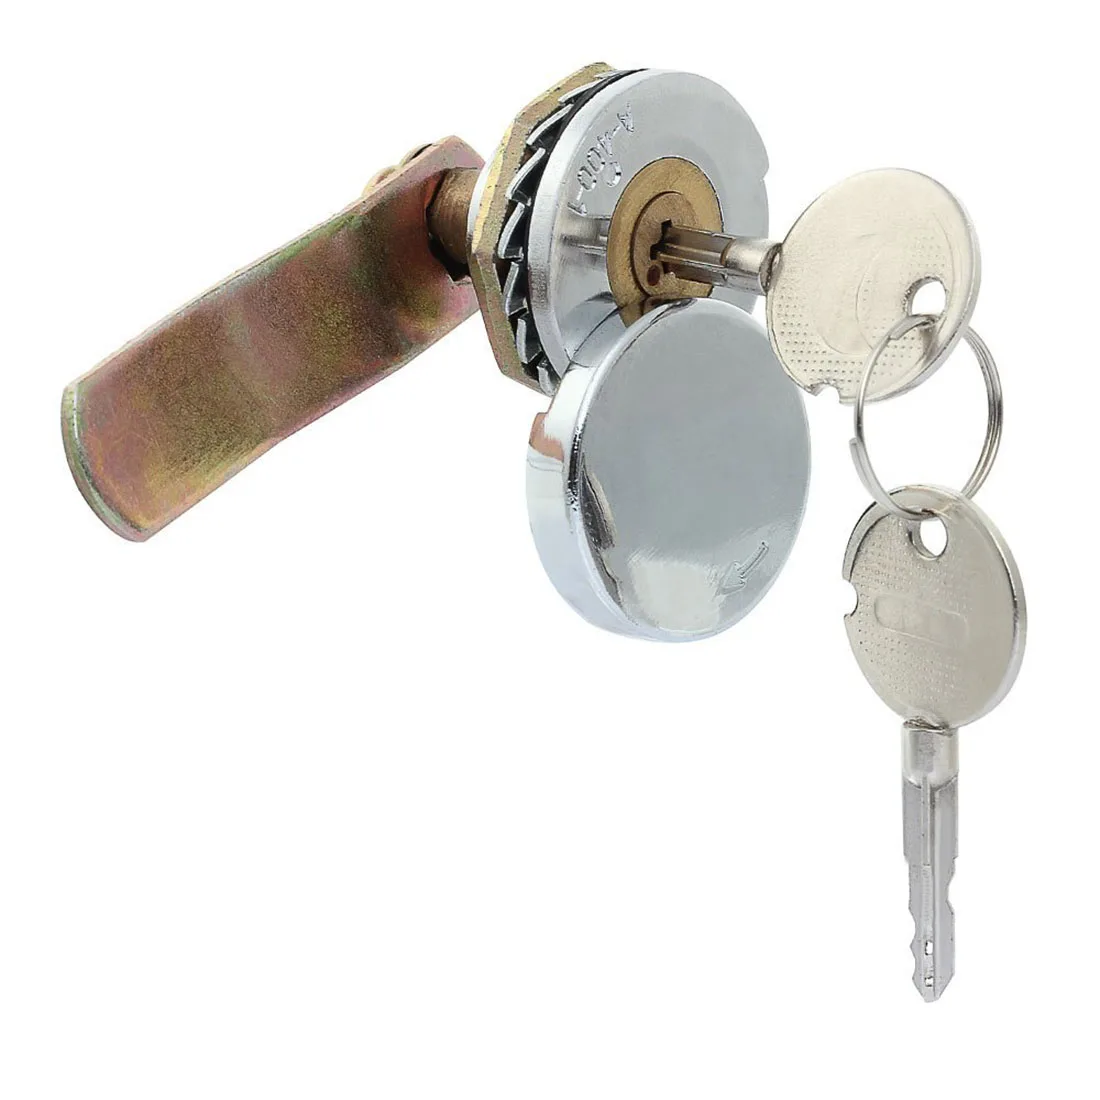 

High-quality Door Lock Useful Steady Cam Lock Padlock for Security Door Cabinet Mailbox Drawer Cupboard Camlock 16mm + 2 Keys